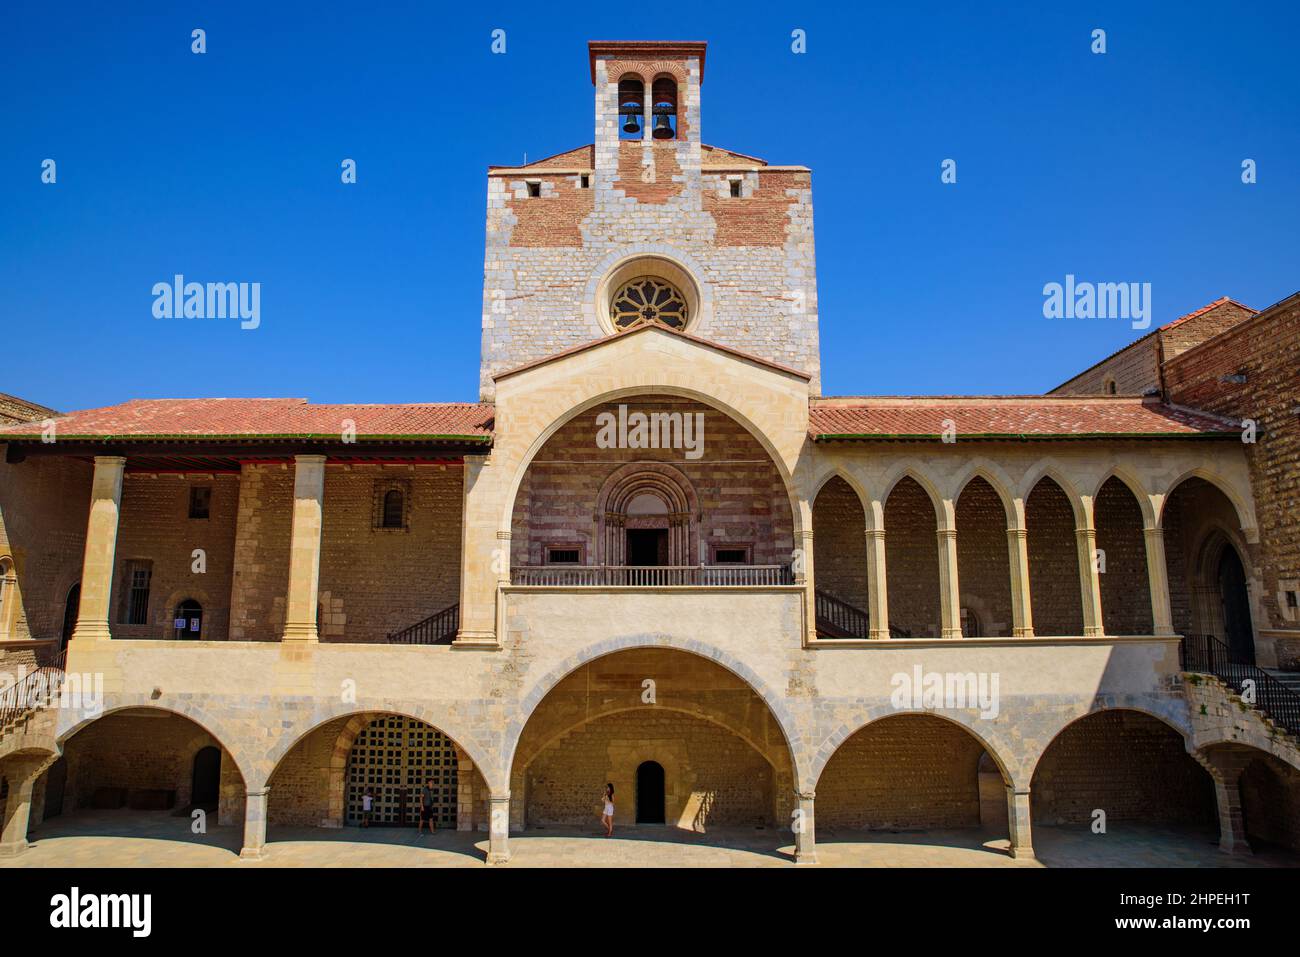 Palace of the Kings of Majorca (Palais des Rois de Majorque), a fortress in Perpignan, France Stock Photo